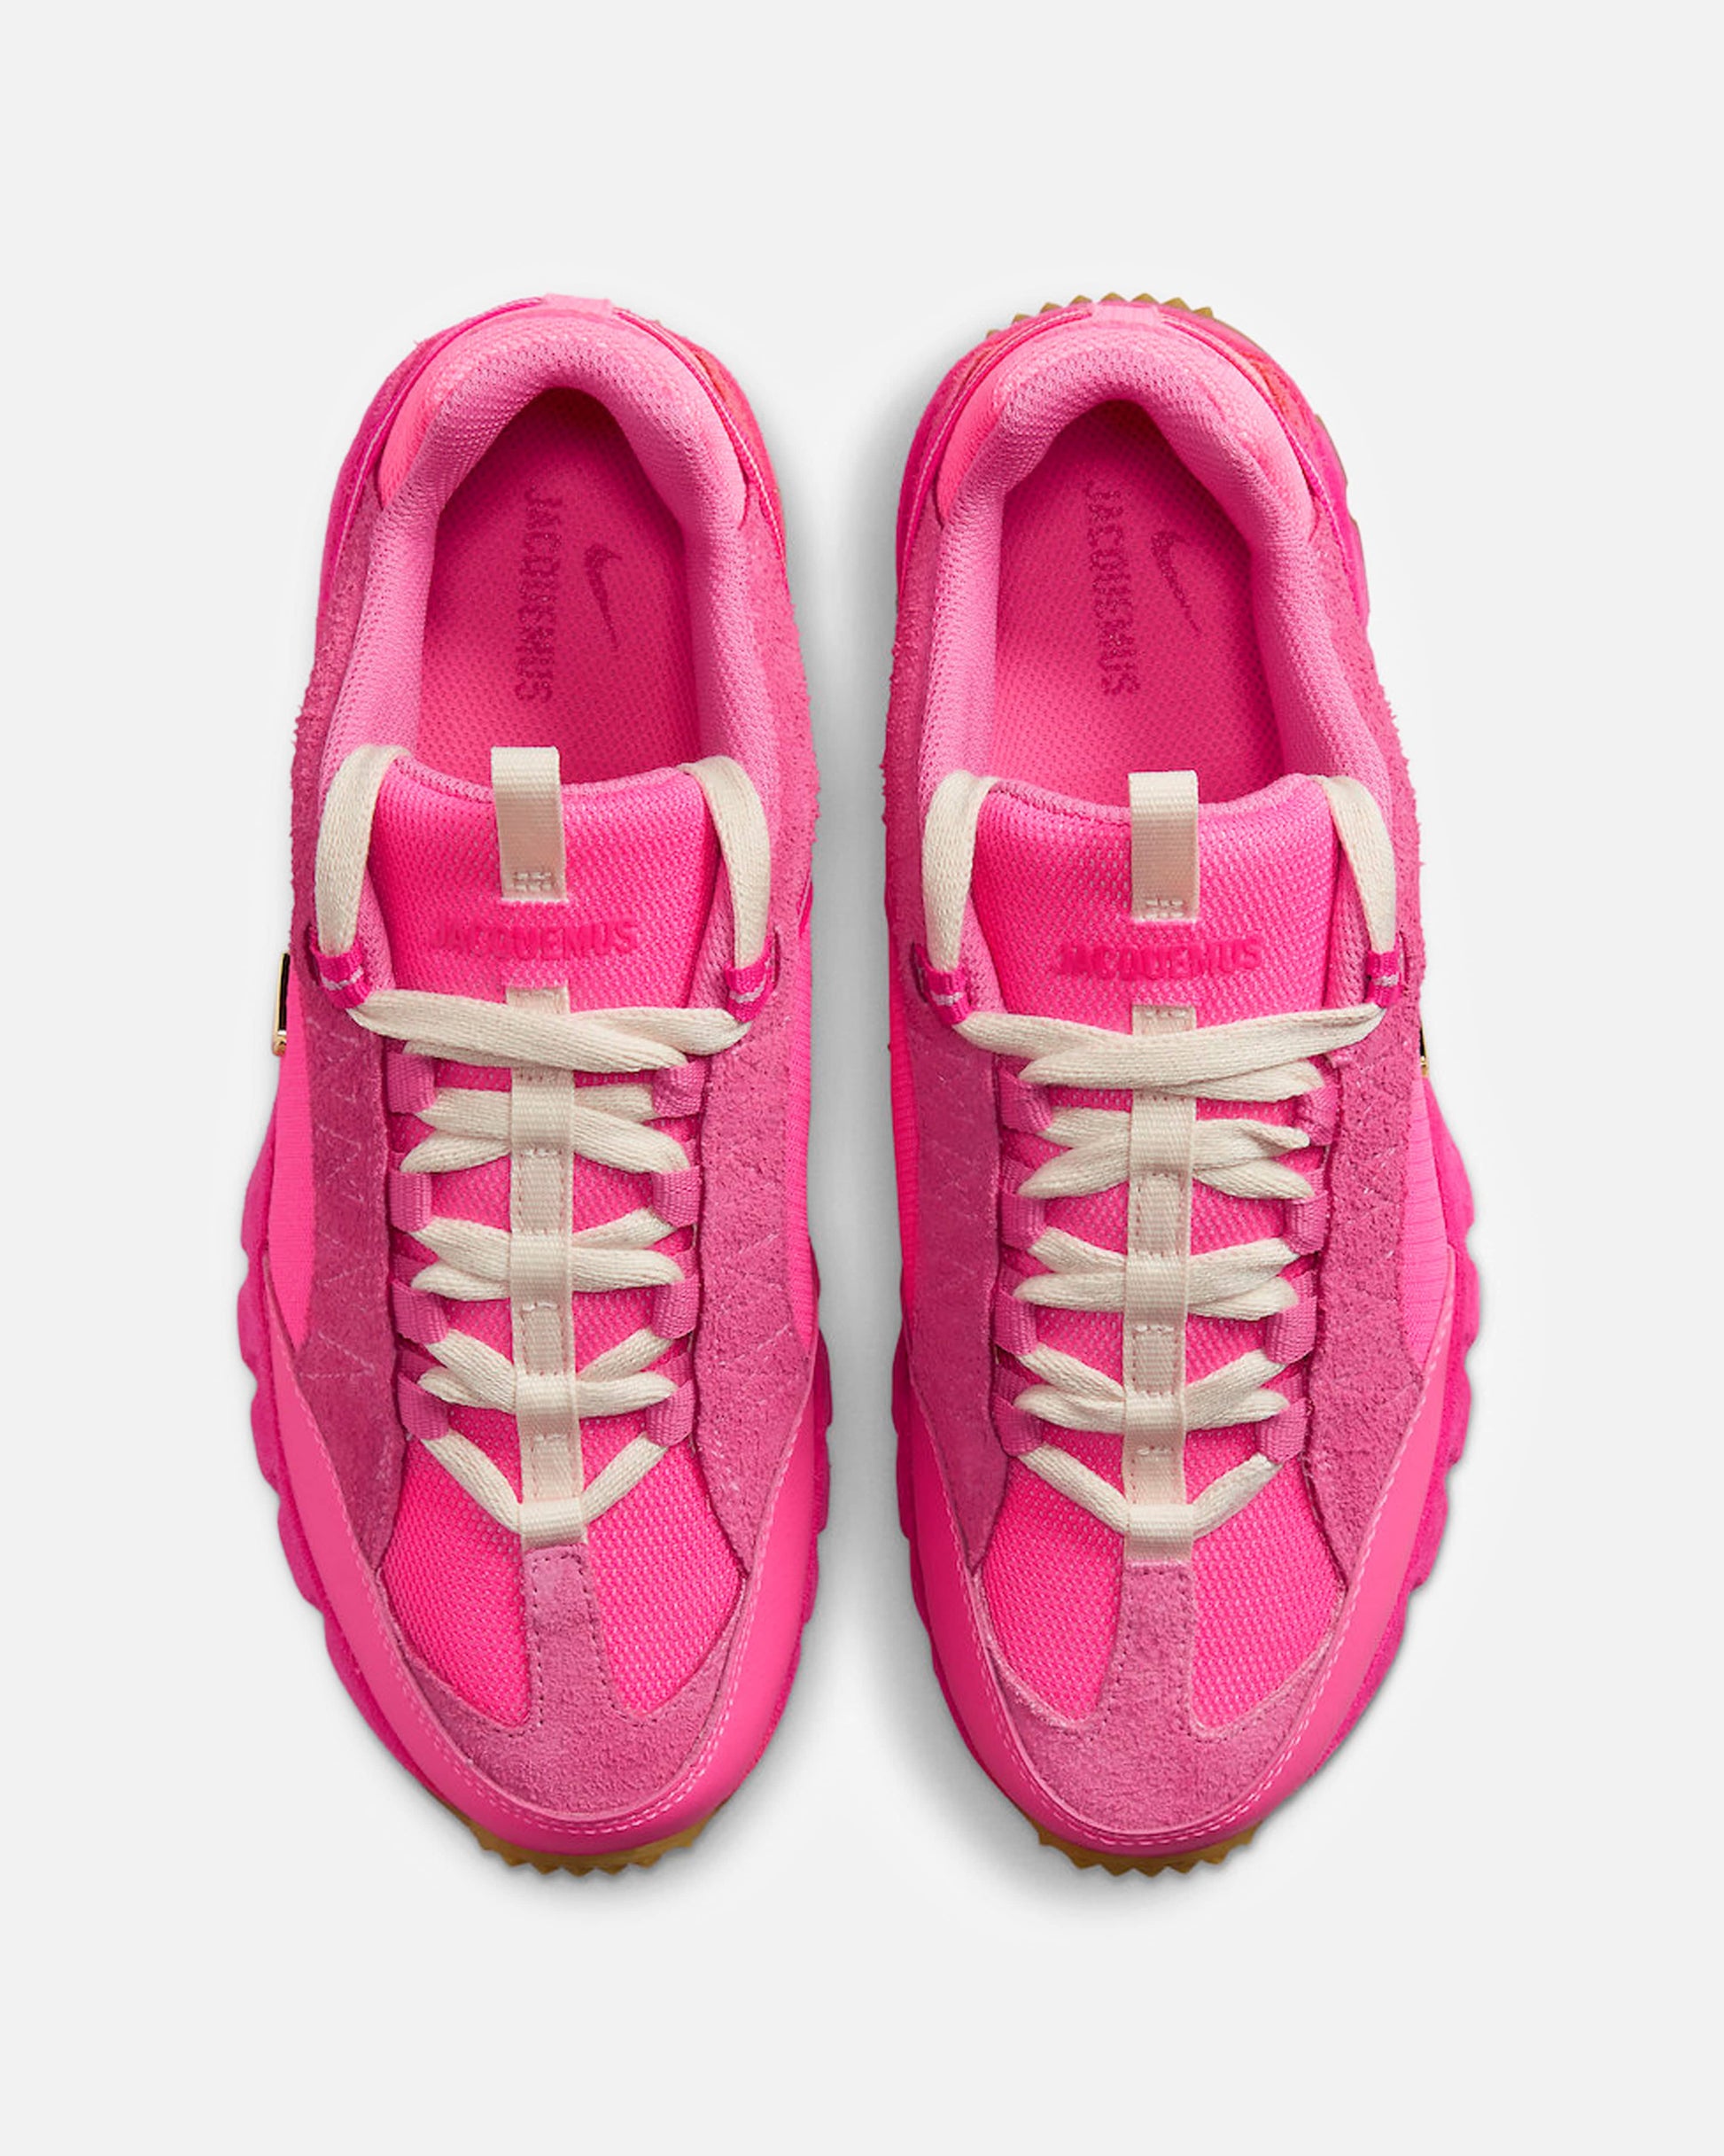 Nike Releases Women's Nike Air Humara x Jacquemus 'Pink Flash'